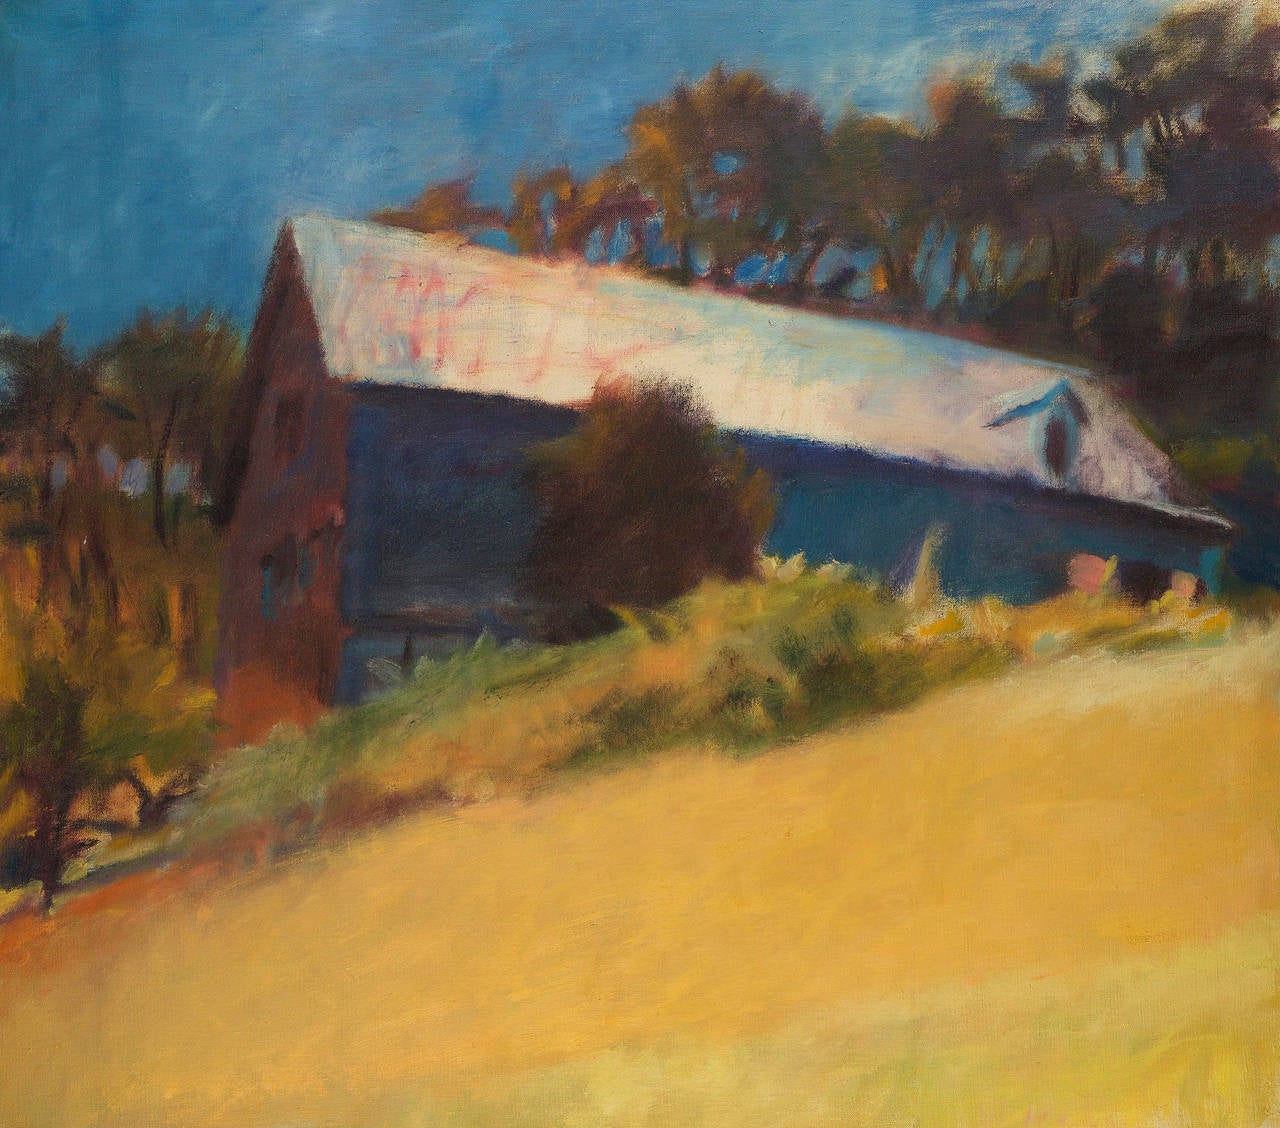 Wolf Kahn Landscape Painting - The Barn Seen as a Ship